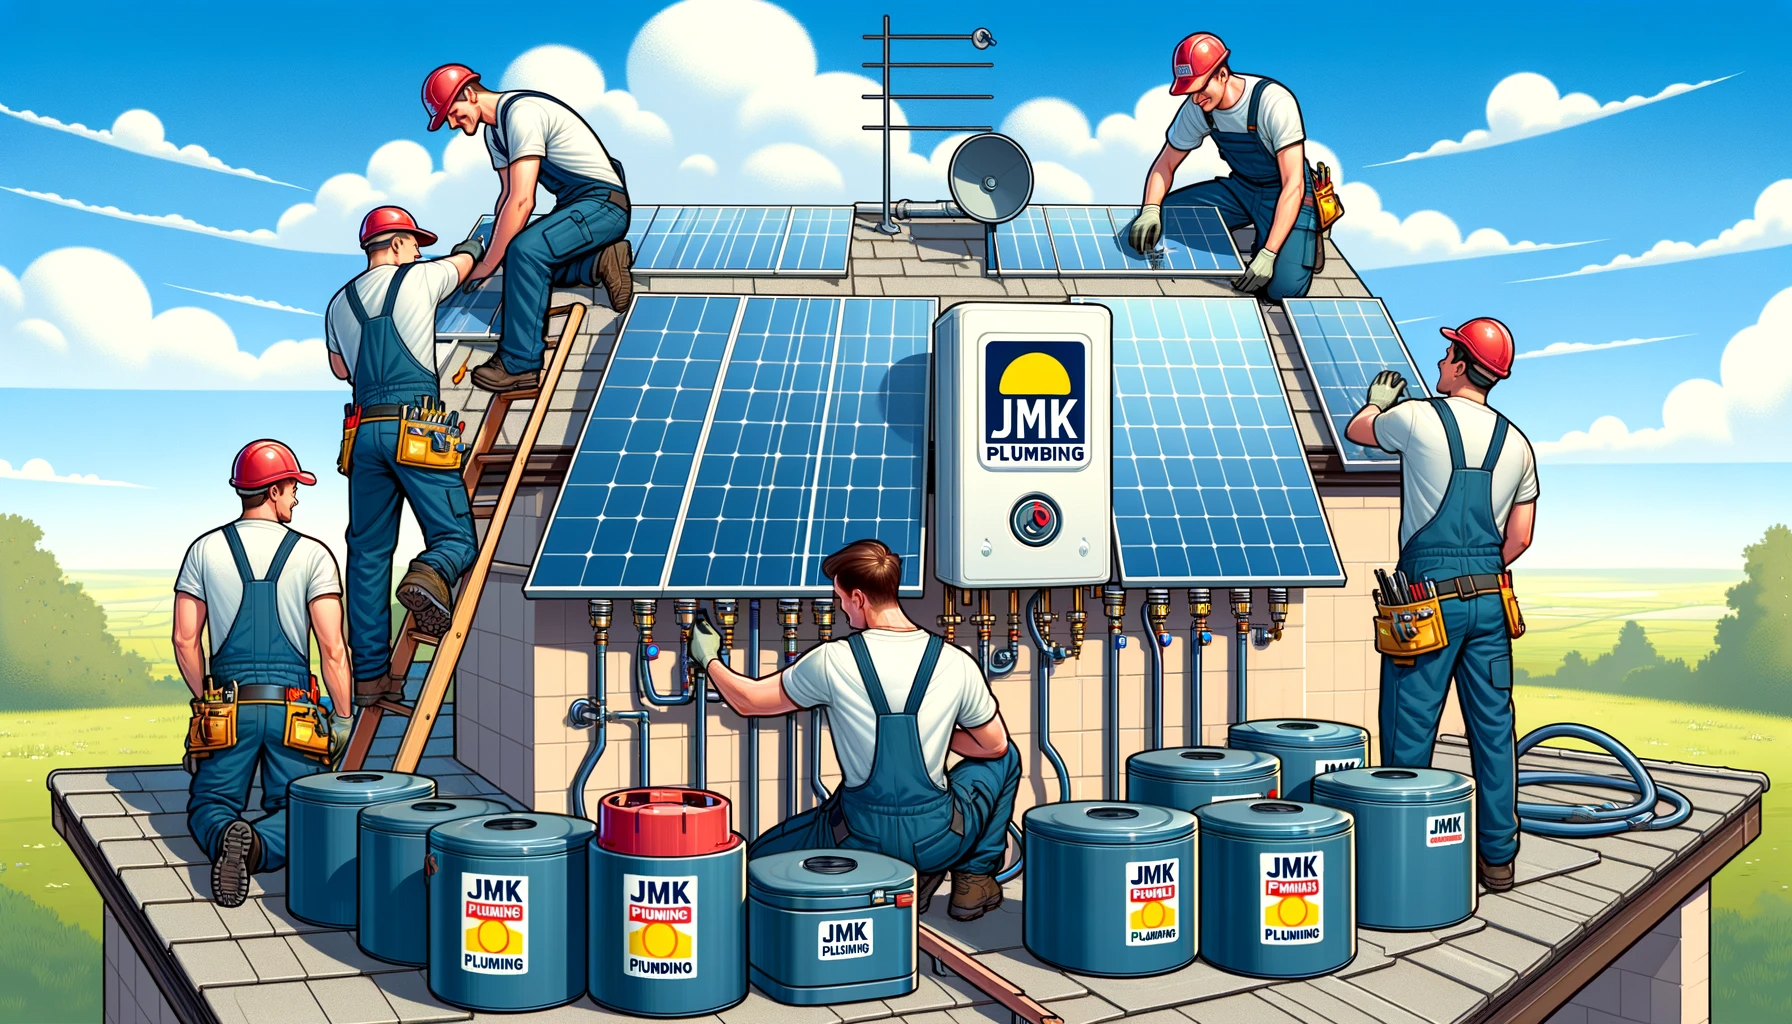 digital illustration of the JMK Plumbing team installing solar water heaters